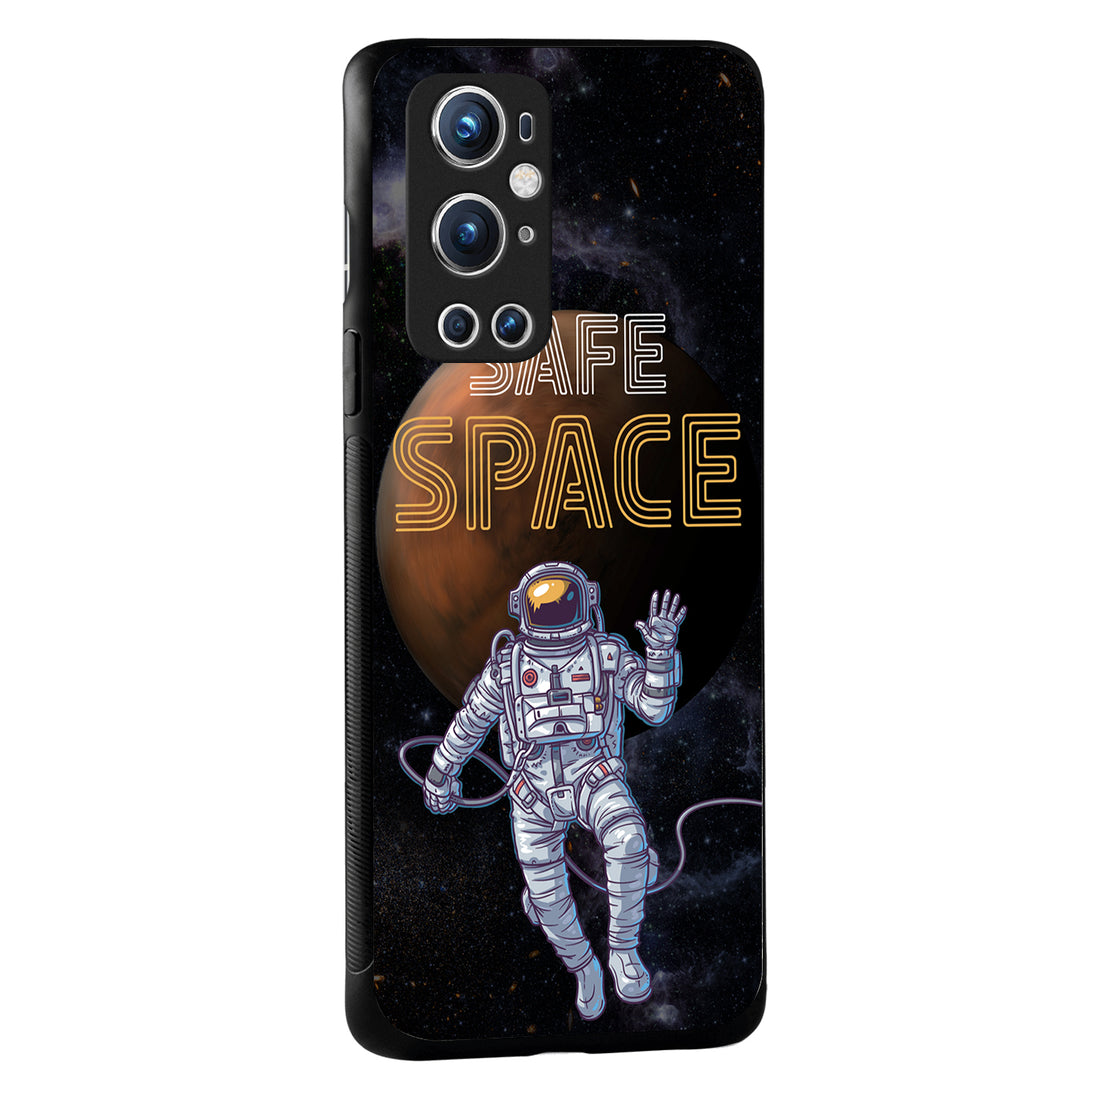 Safe Space Oneplus 9 Pro Back Case